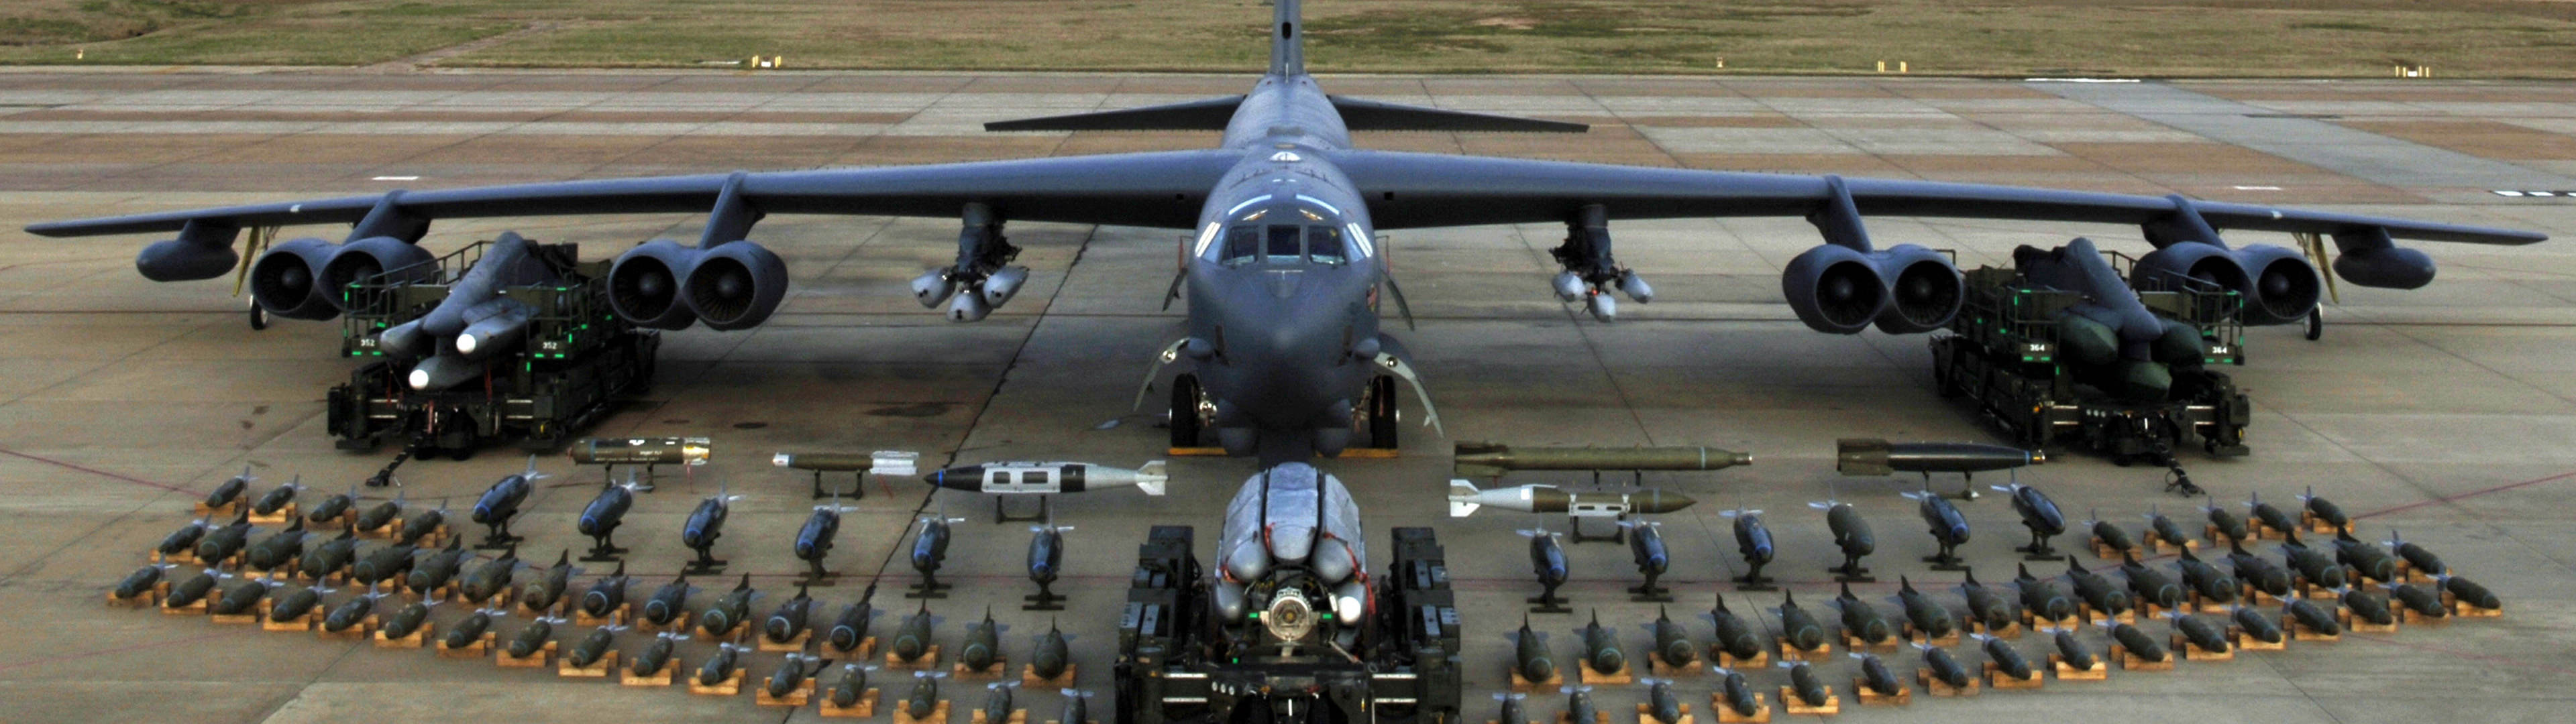 Boeing B-52, Dual monitor wallpaper, Military aircraft, Album on Imgur, 3840x1080 Dual Screen Desktop